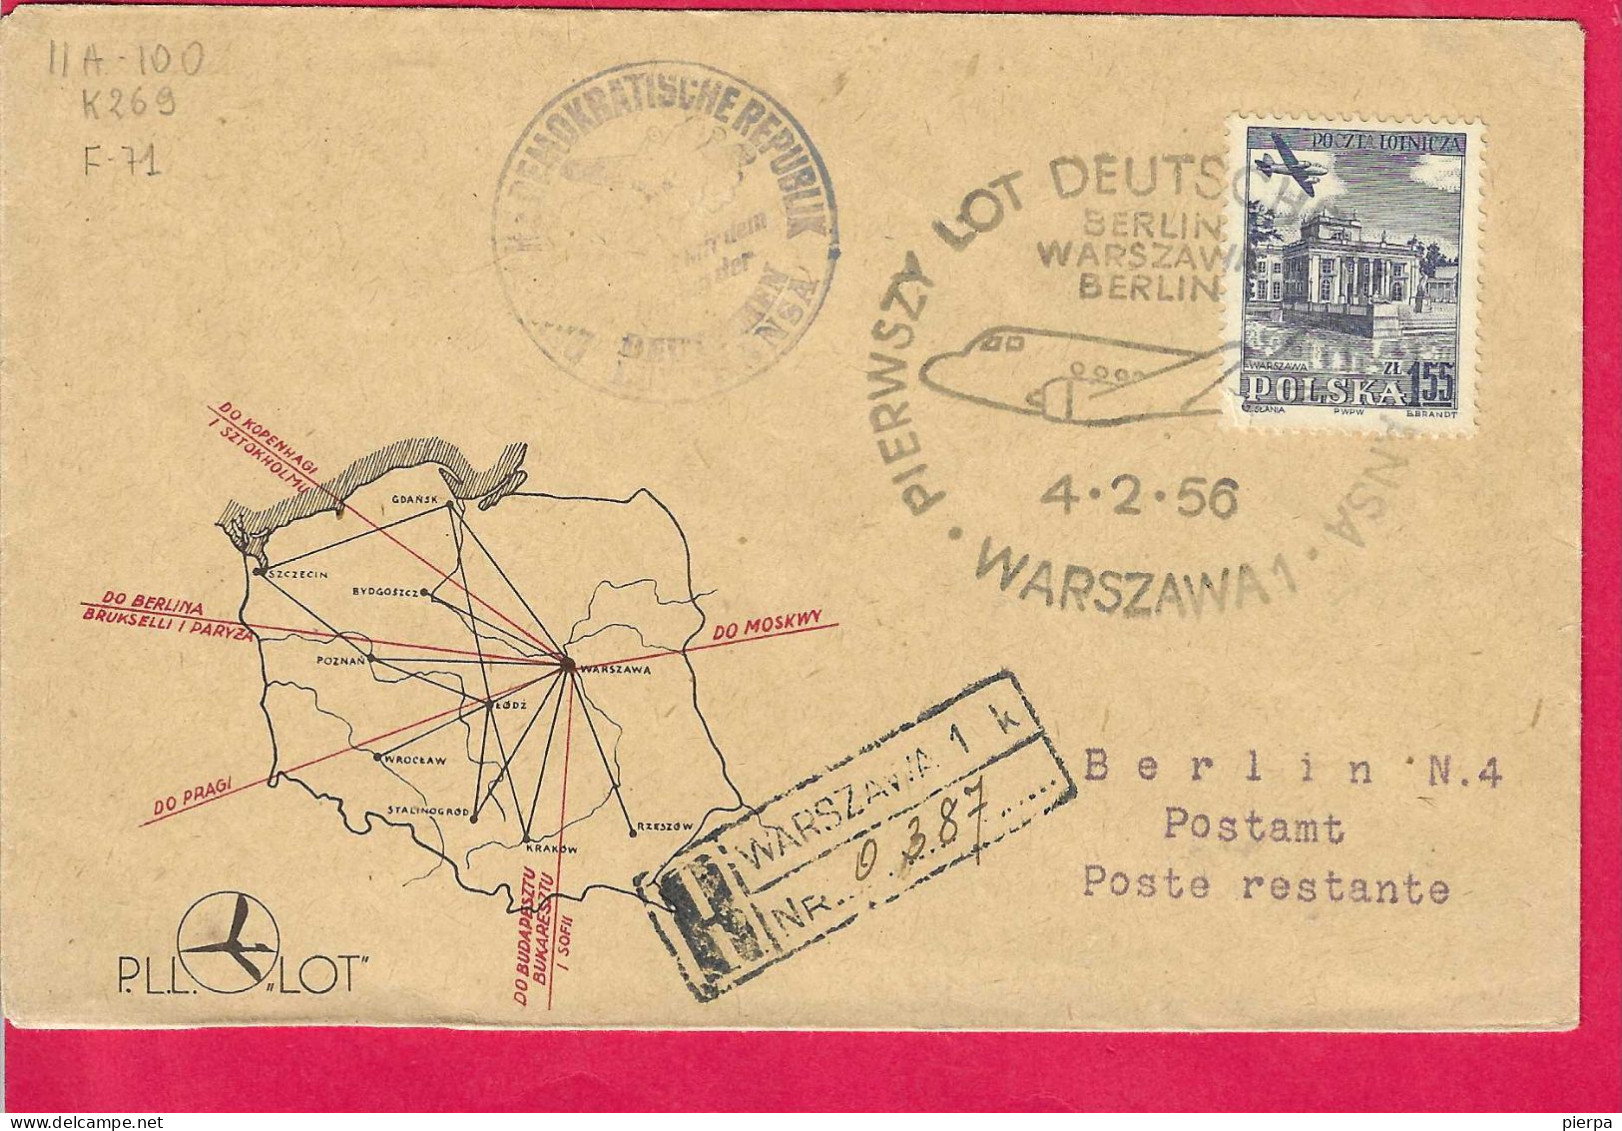 POLAND - LOT FLIGHT BERLIN/WARSZAWA/BERLIN *4.2.56* ON OFFICIAL COVER - Flugzeuge